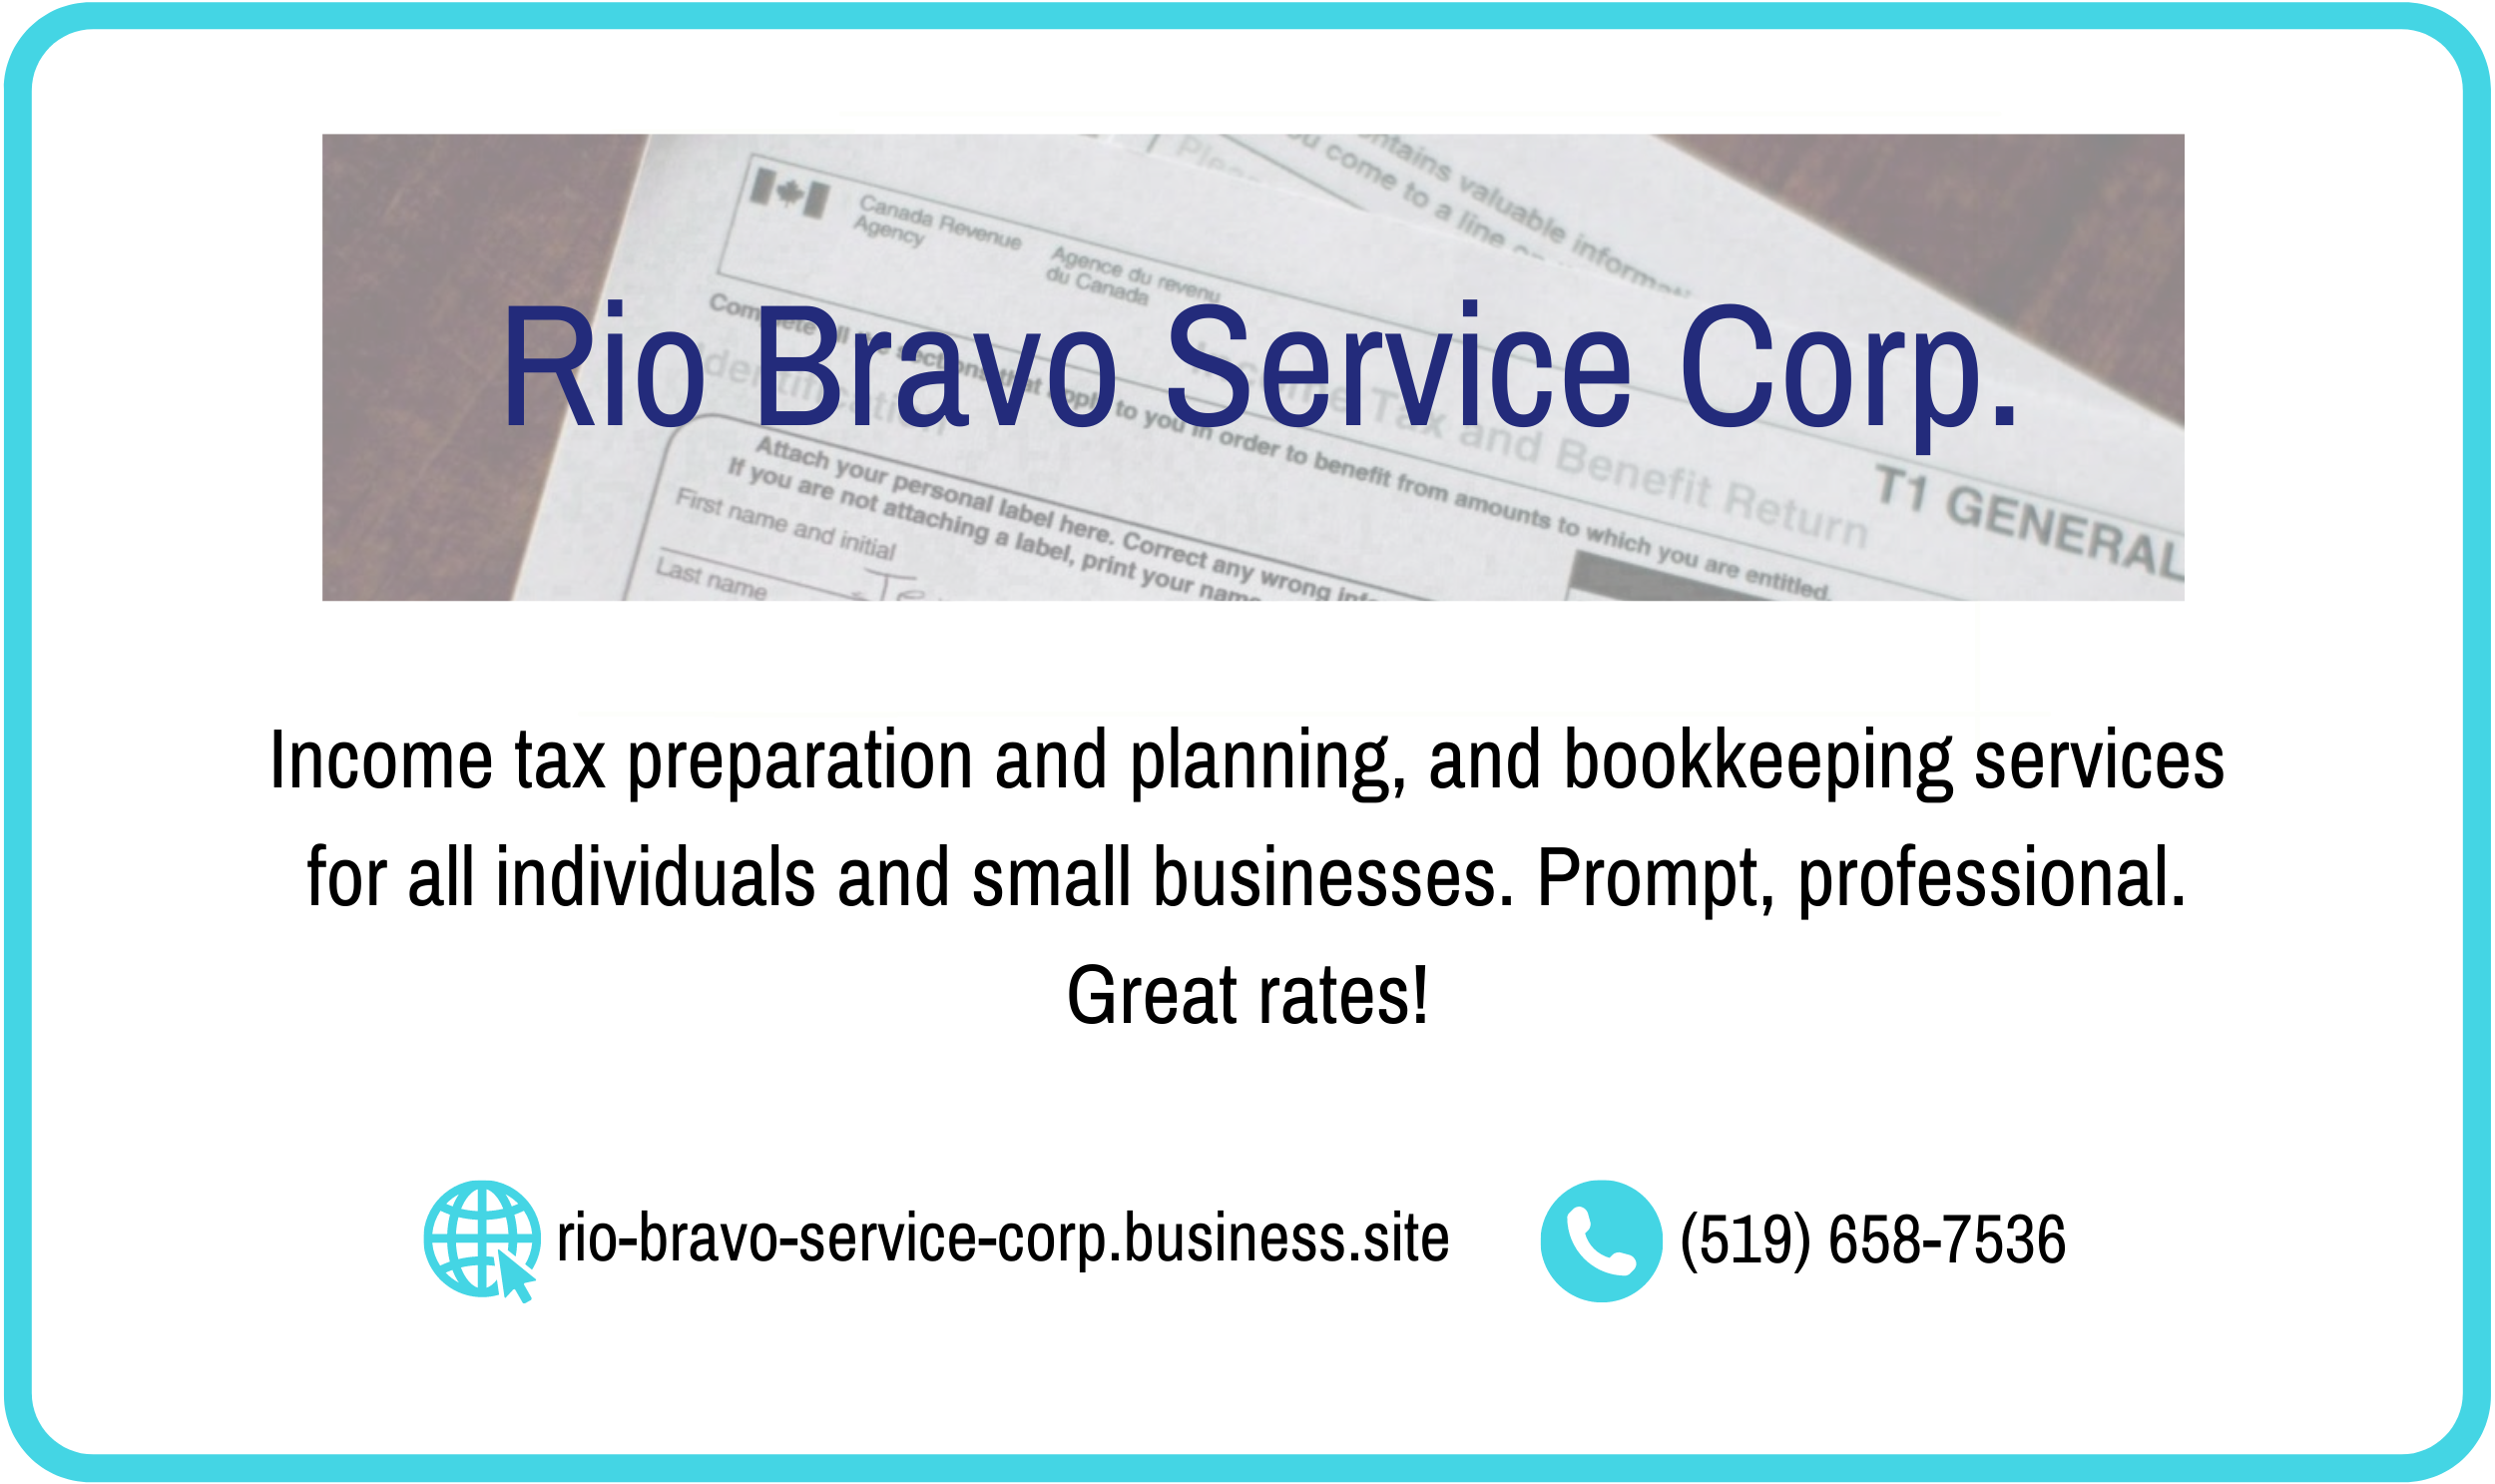 Rio Bravo Service Corp